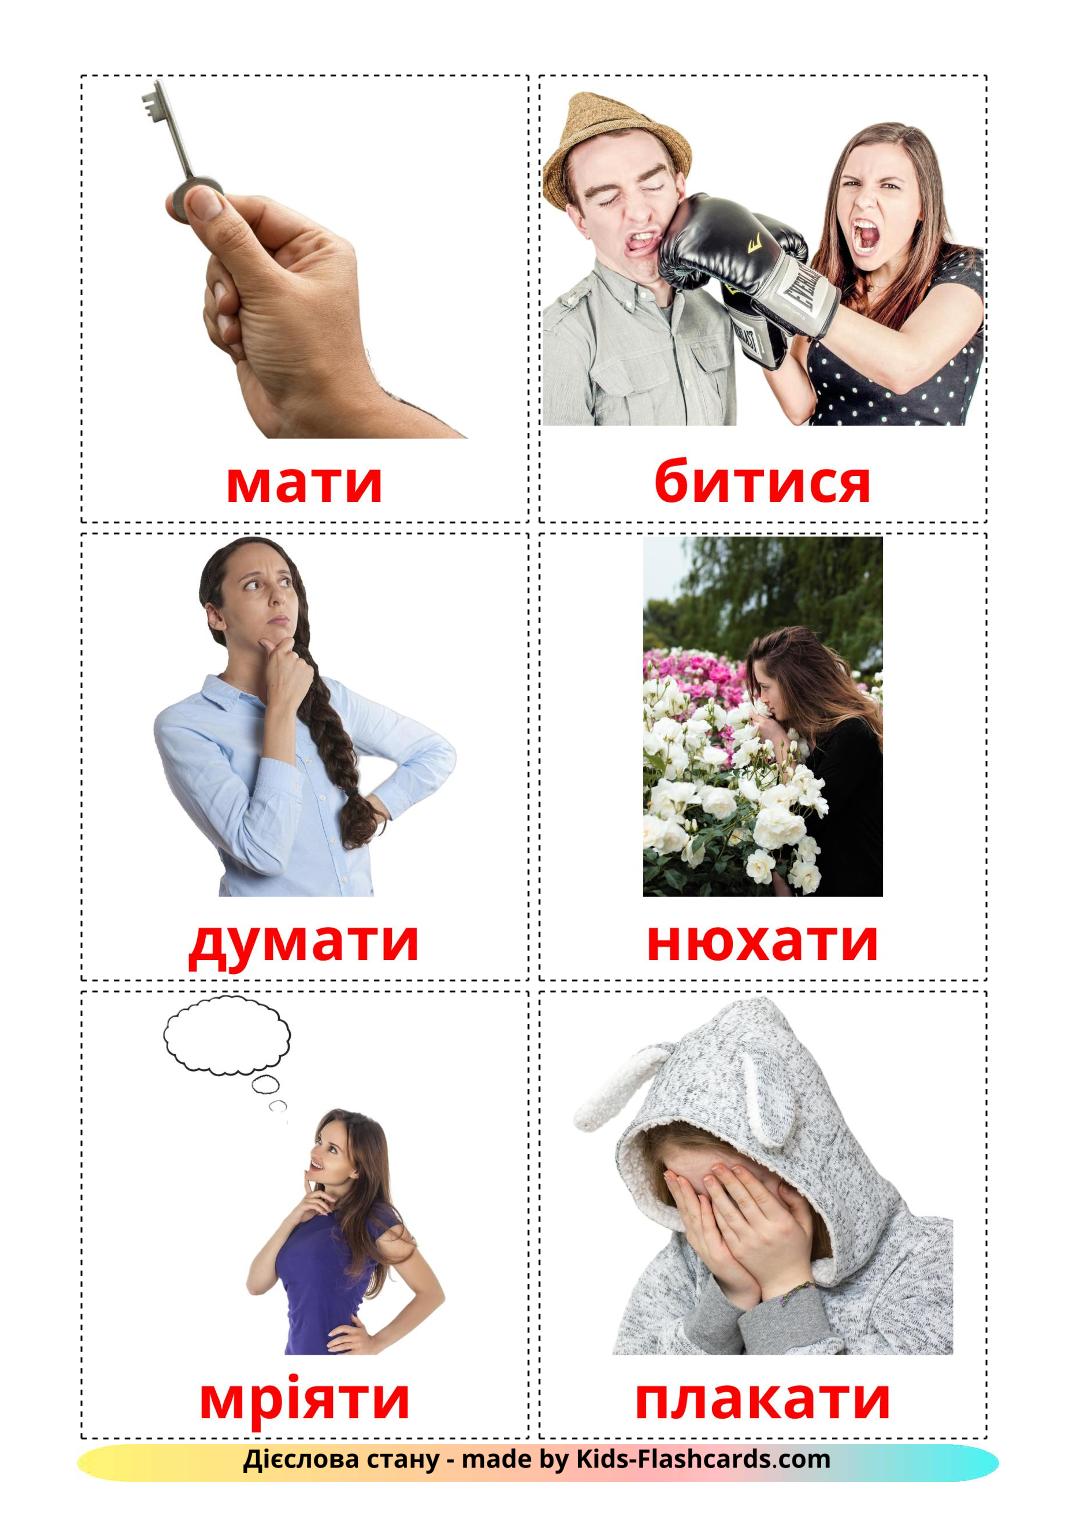 State verbs - 23 Free Printable ukrainian Flashcards 